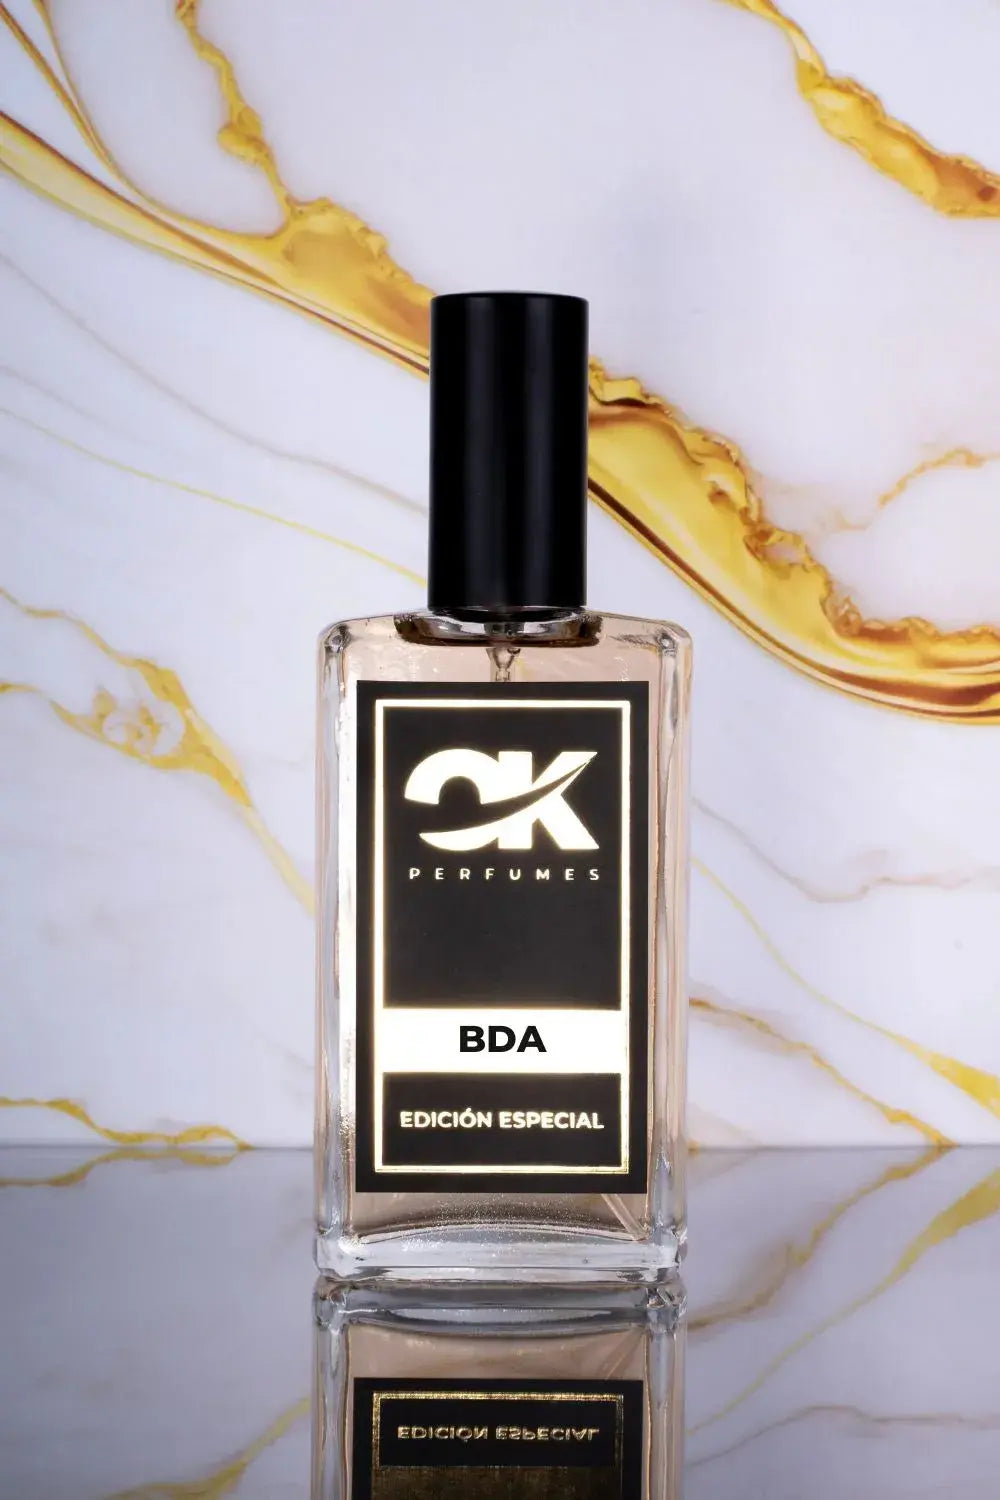 BDA - Recuerda a Bois d'Argent de Dior